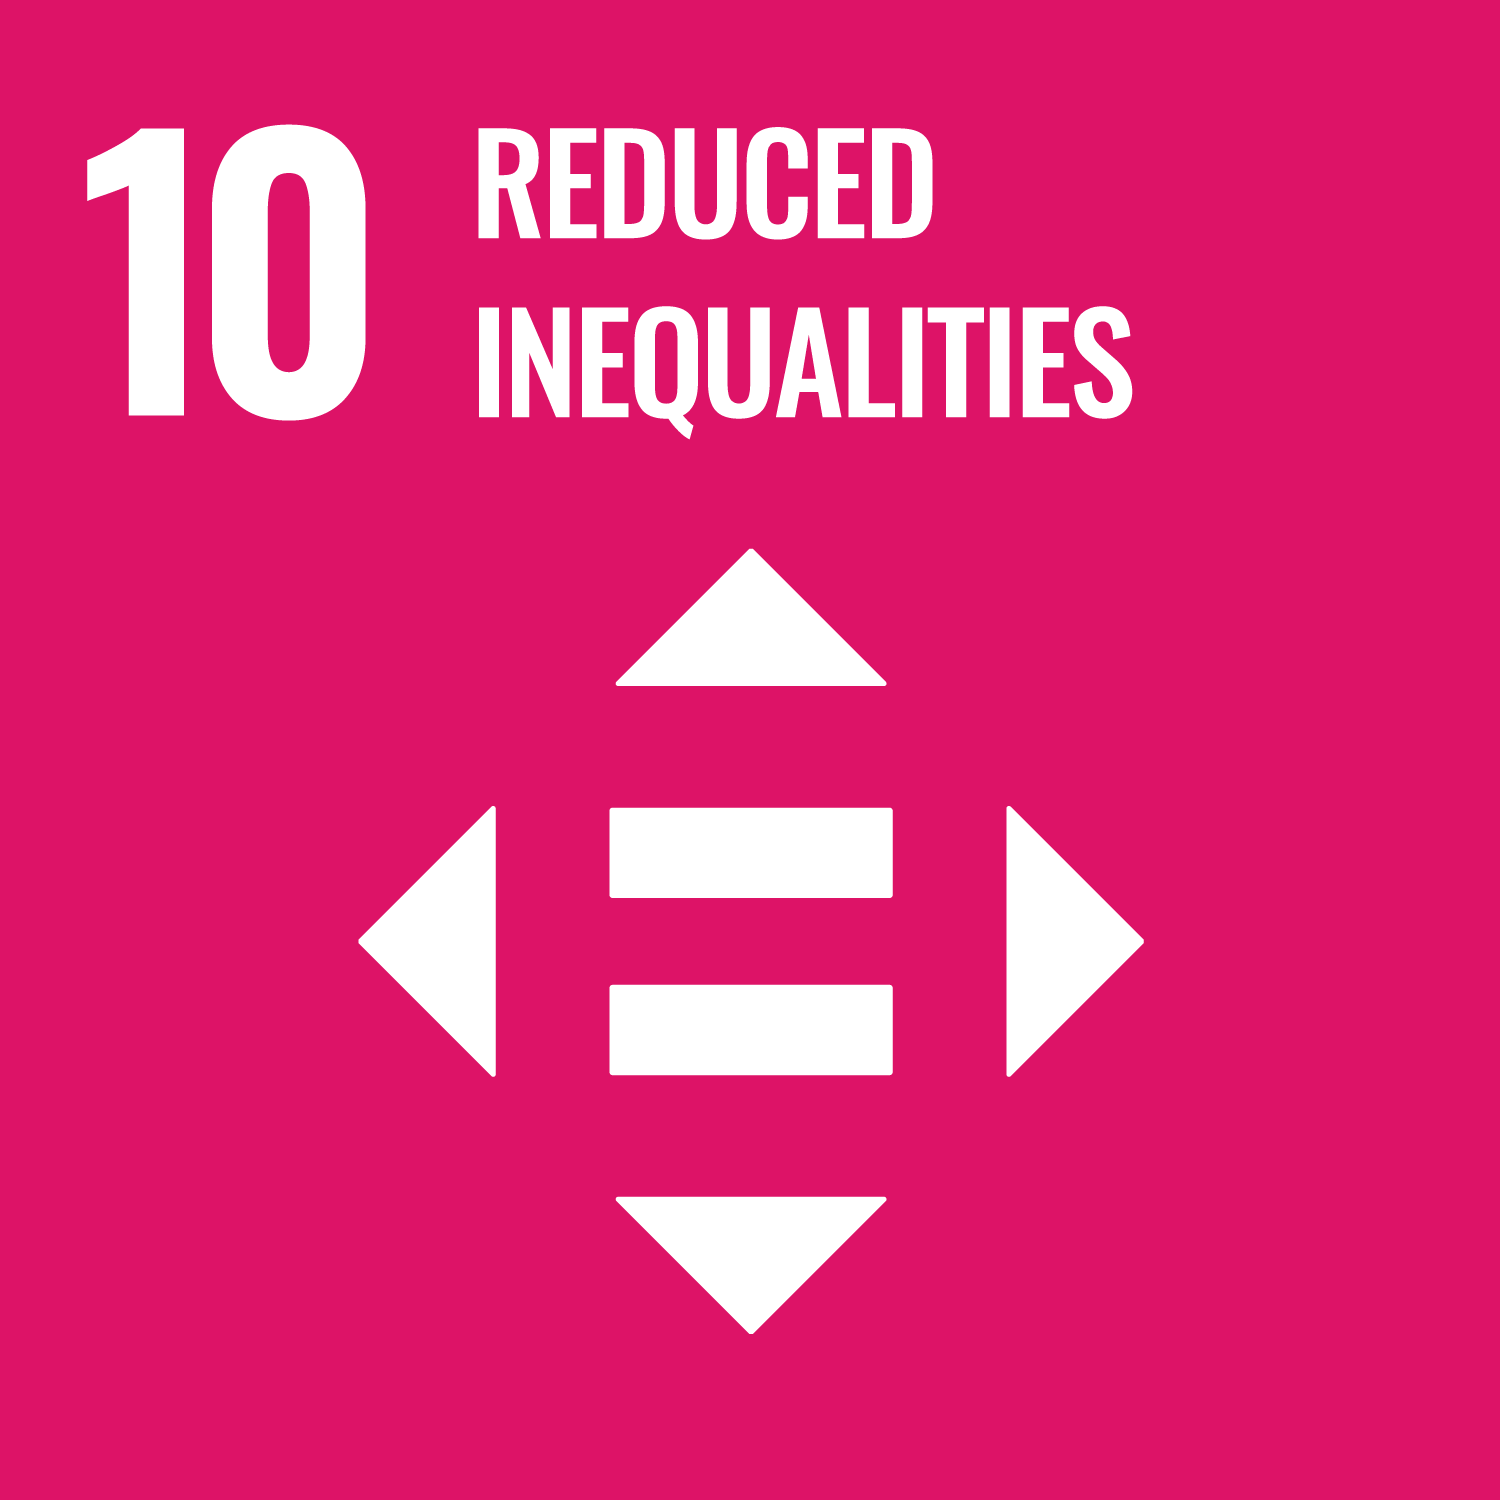 SDGs Goal 10